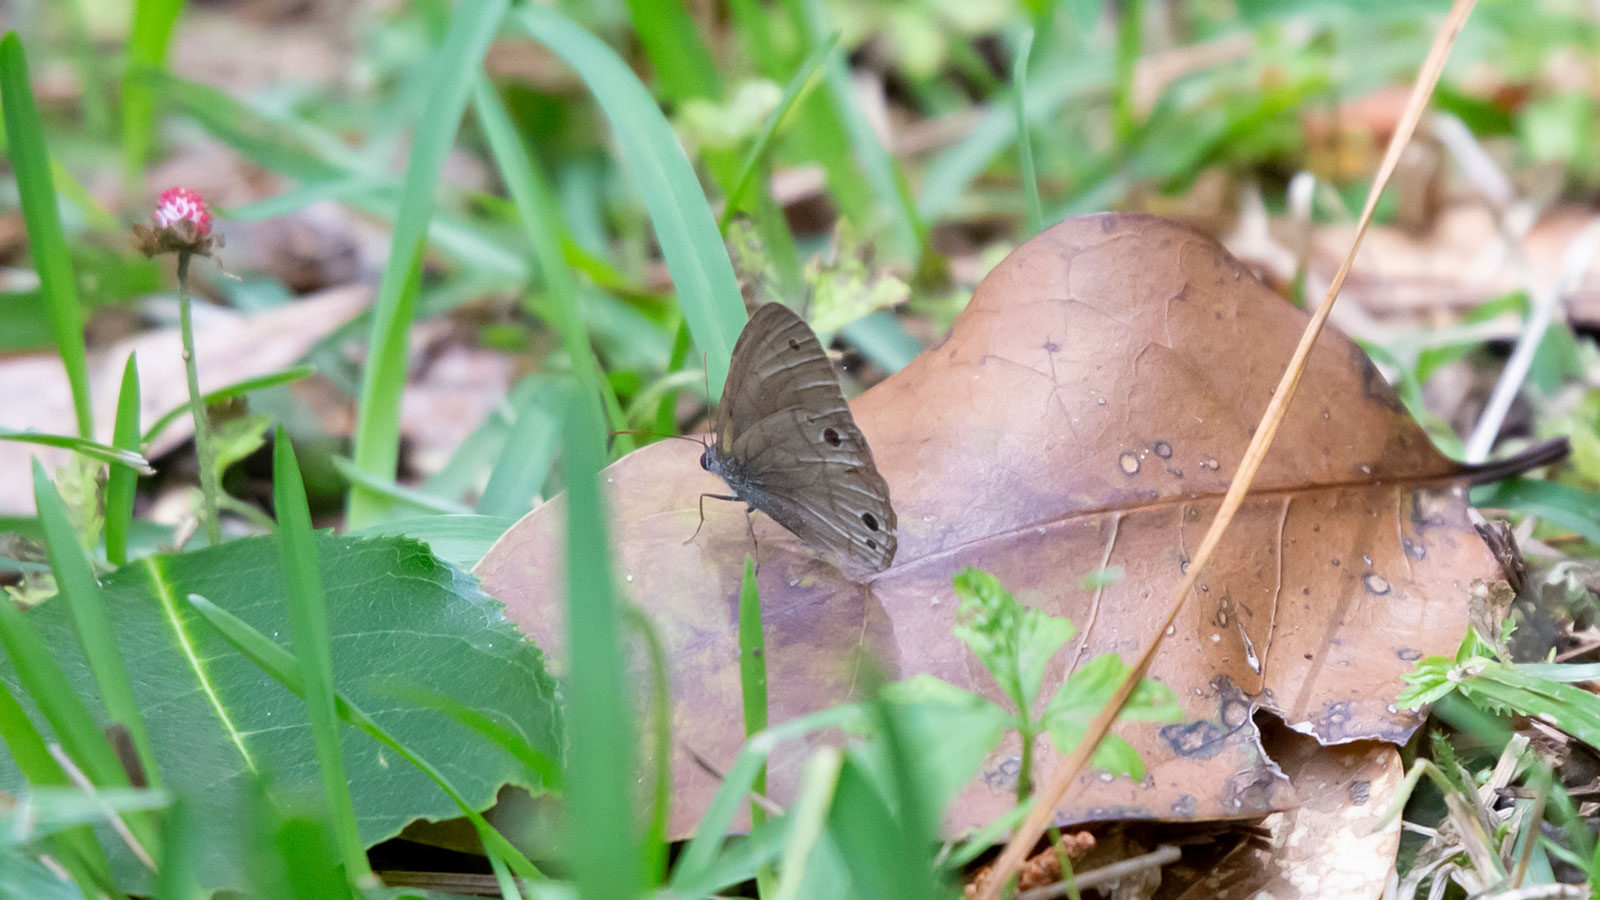 Carolina satyr butterfly on a dead, brown leaf